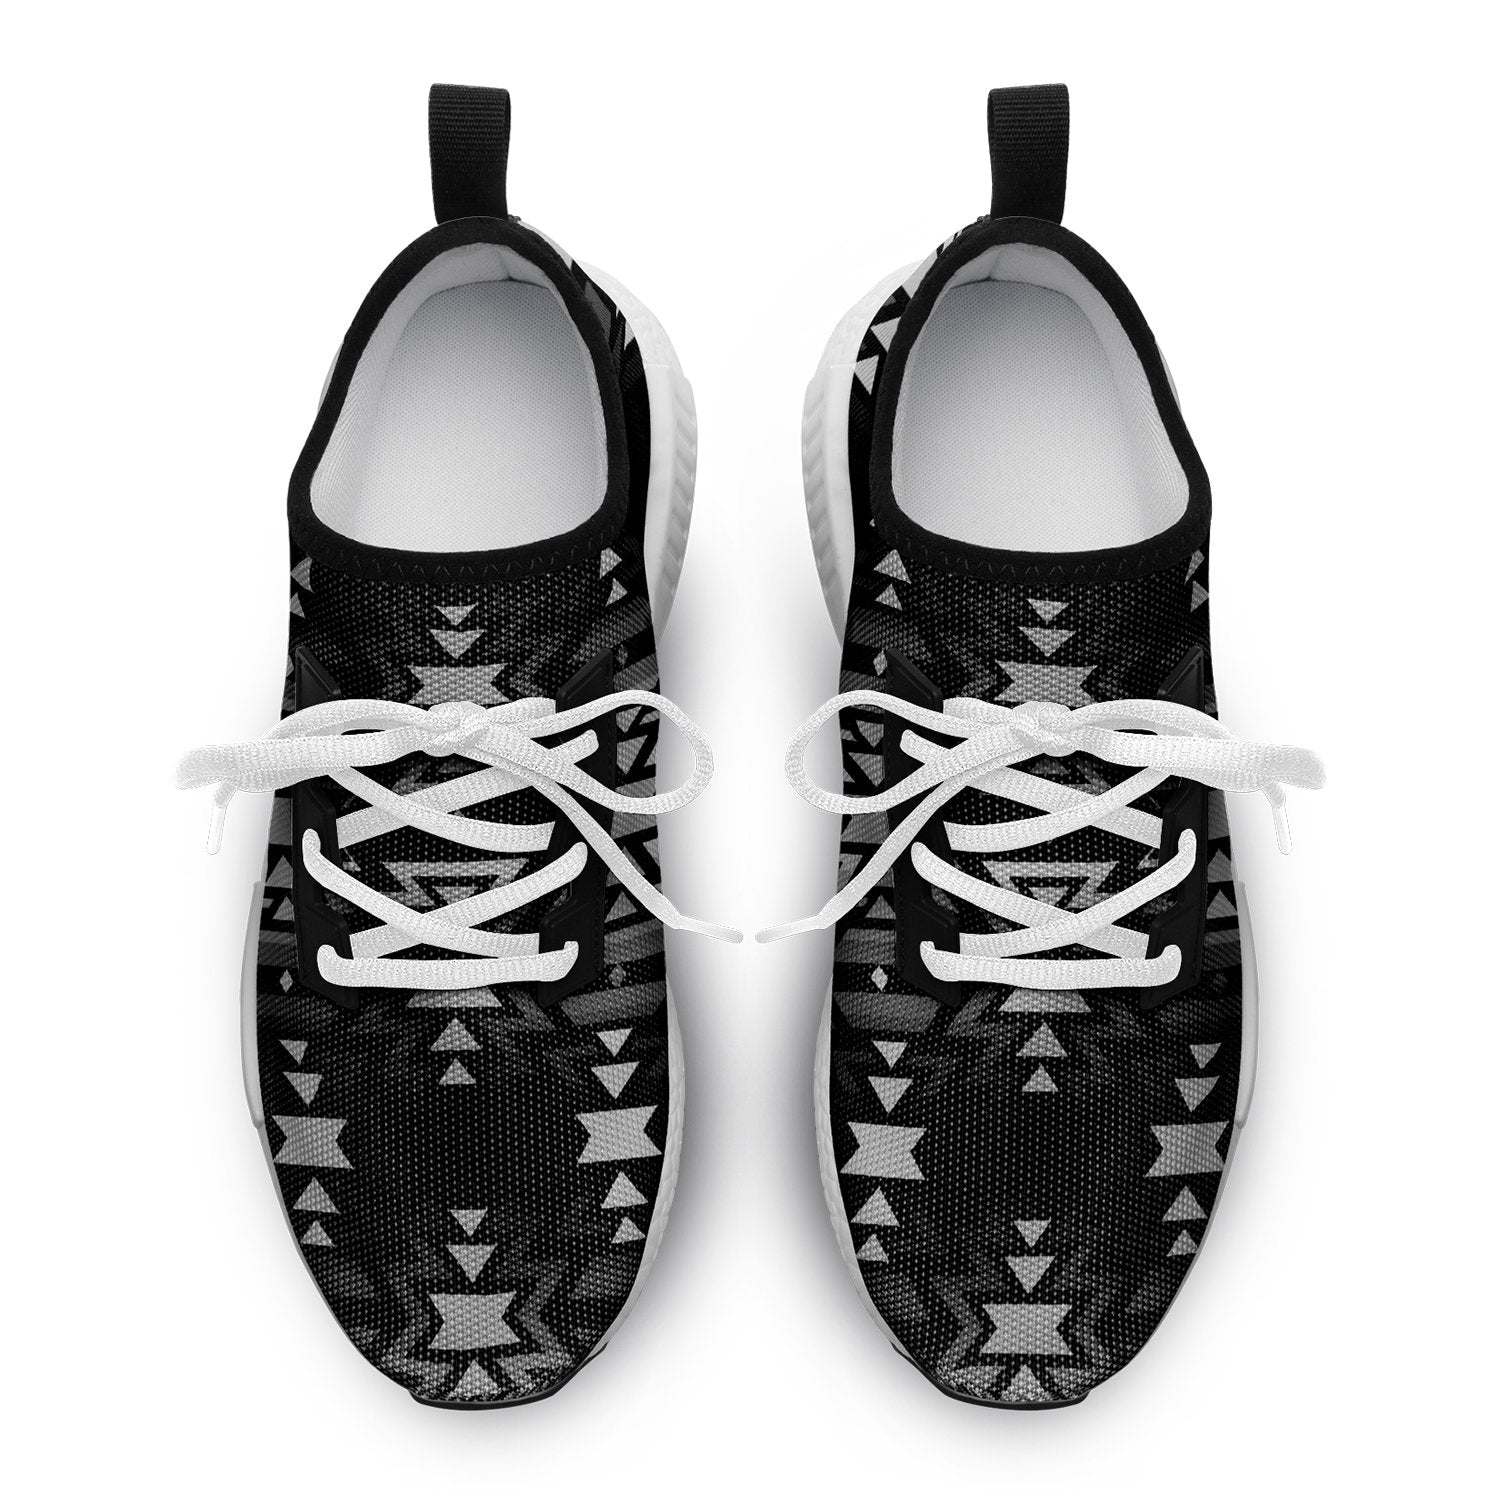 Black Fire Black and White Draco Running Shoes 49 Dzine 